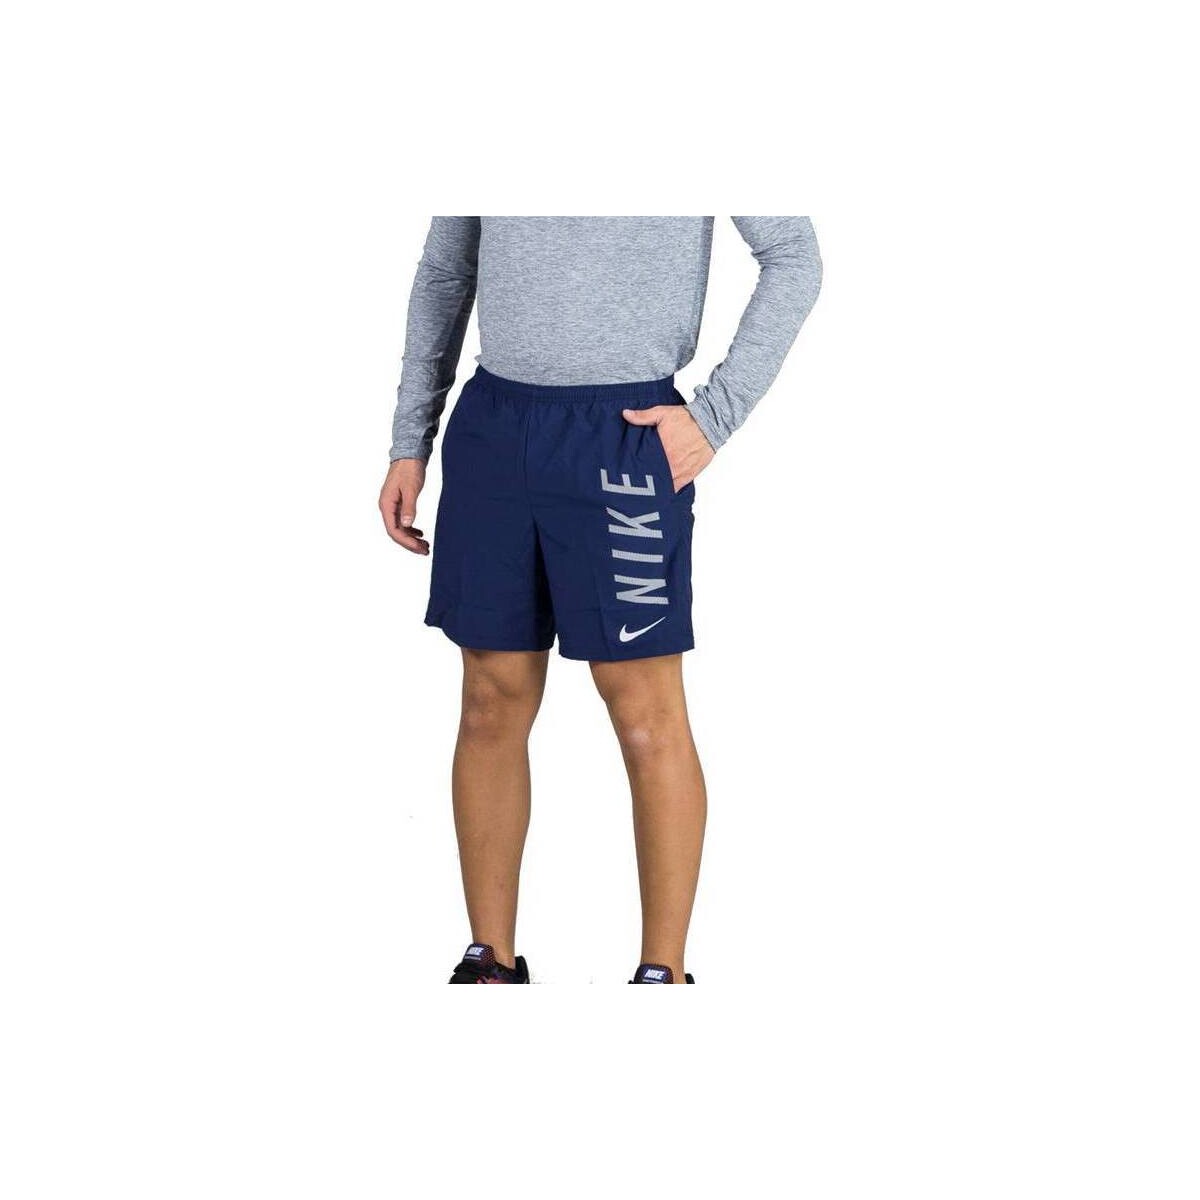 Kleidung Herren Shorts / Bermudas Nike 943365 Blau